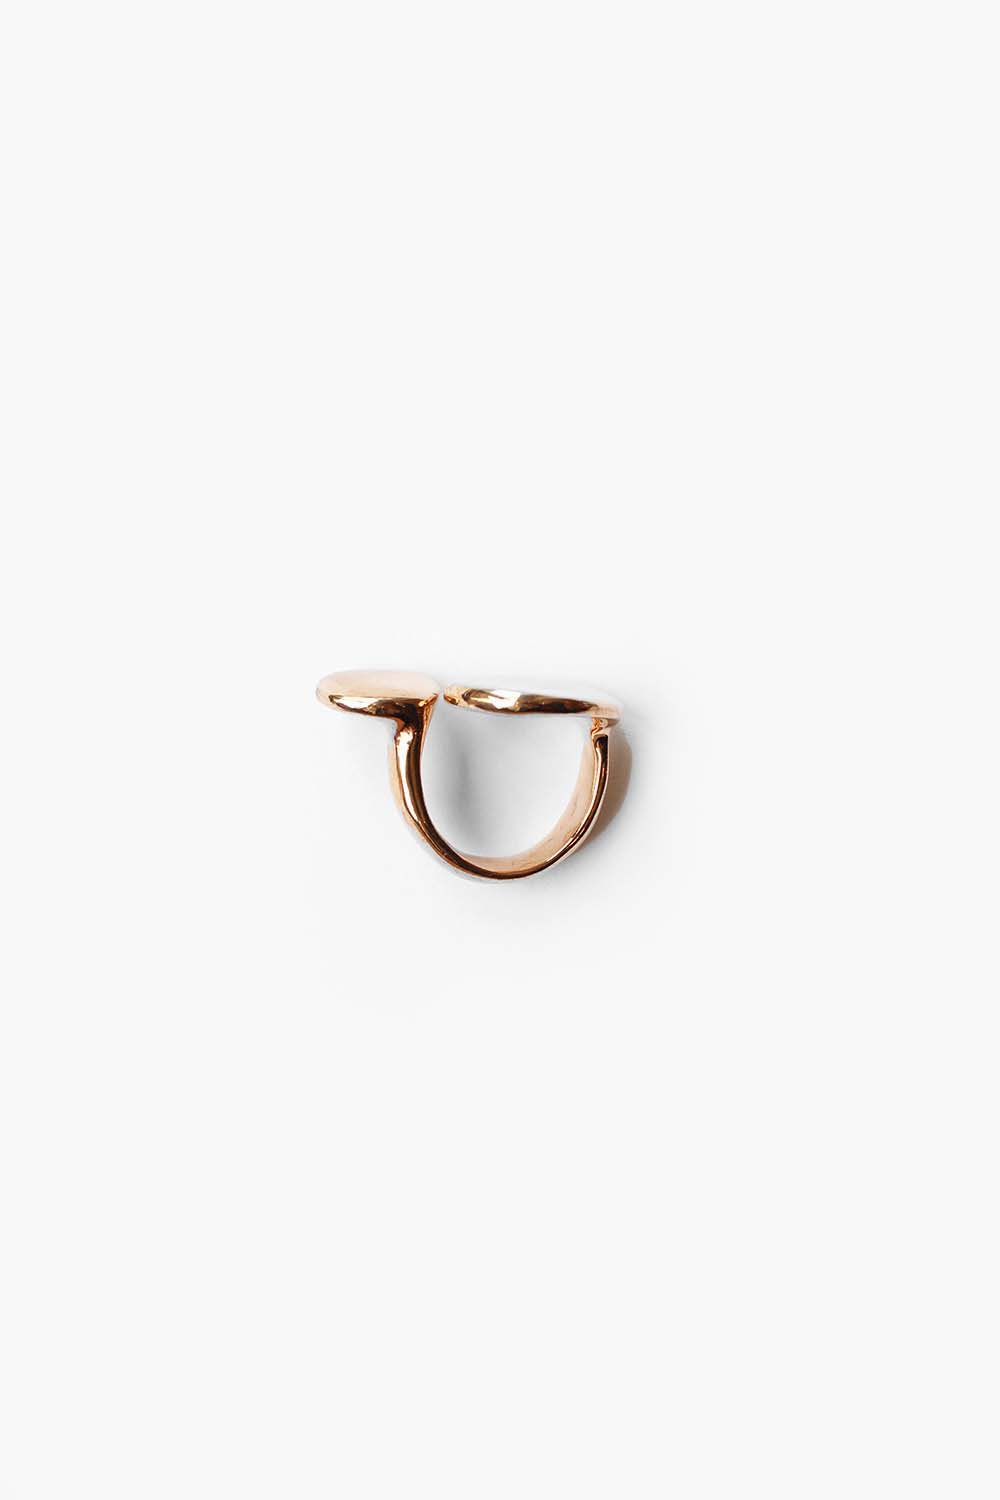 Spatusce Ring Bronze 05